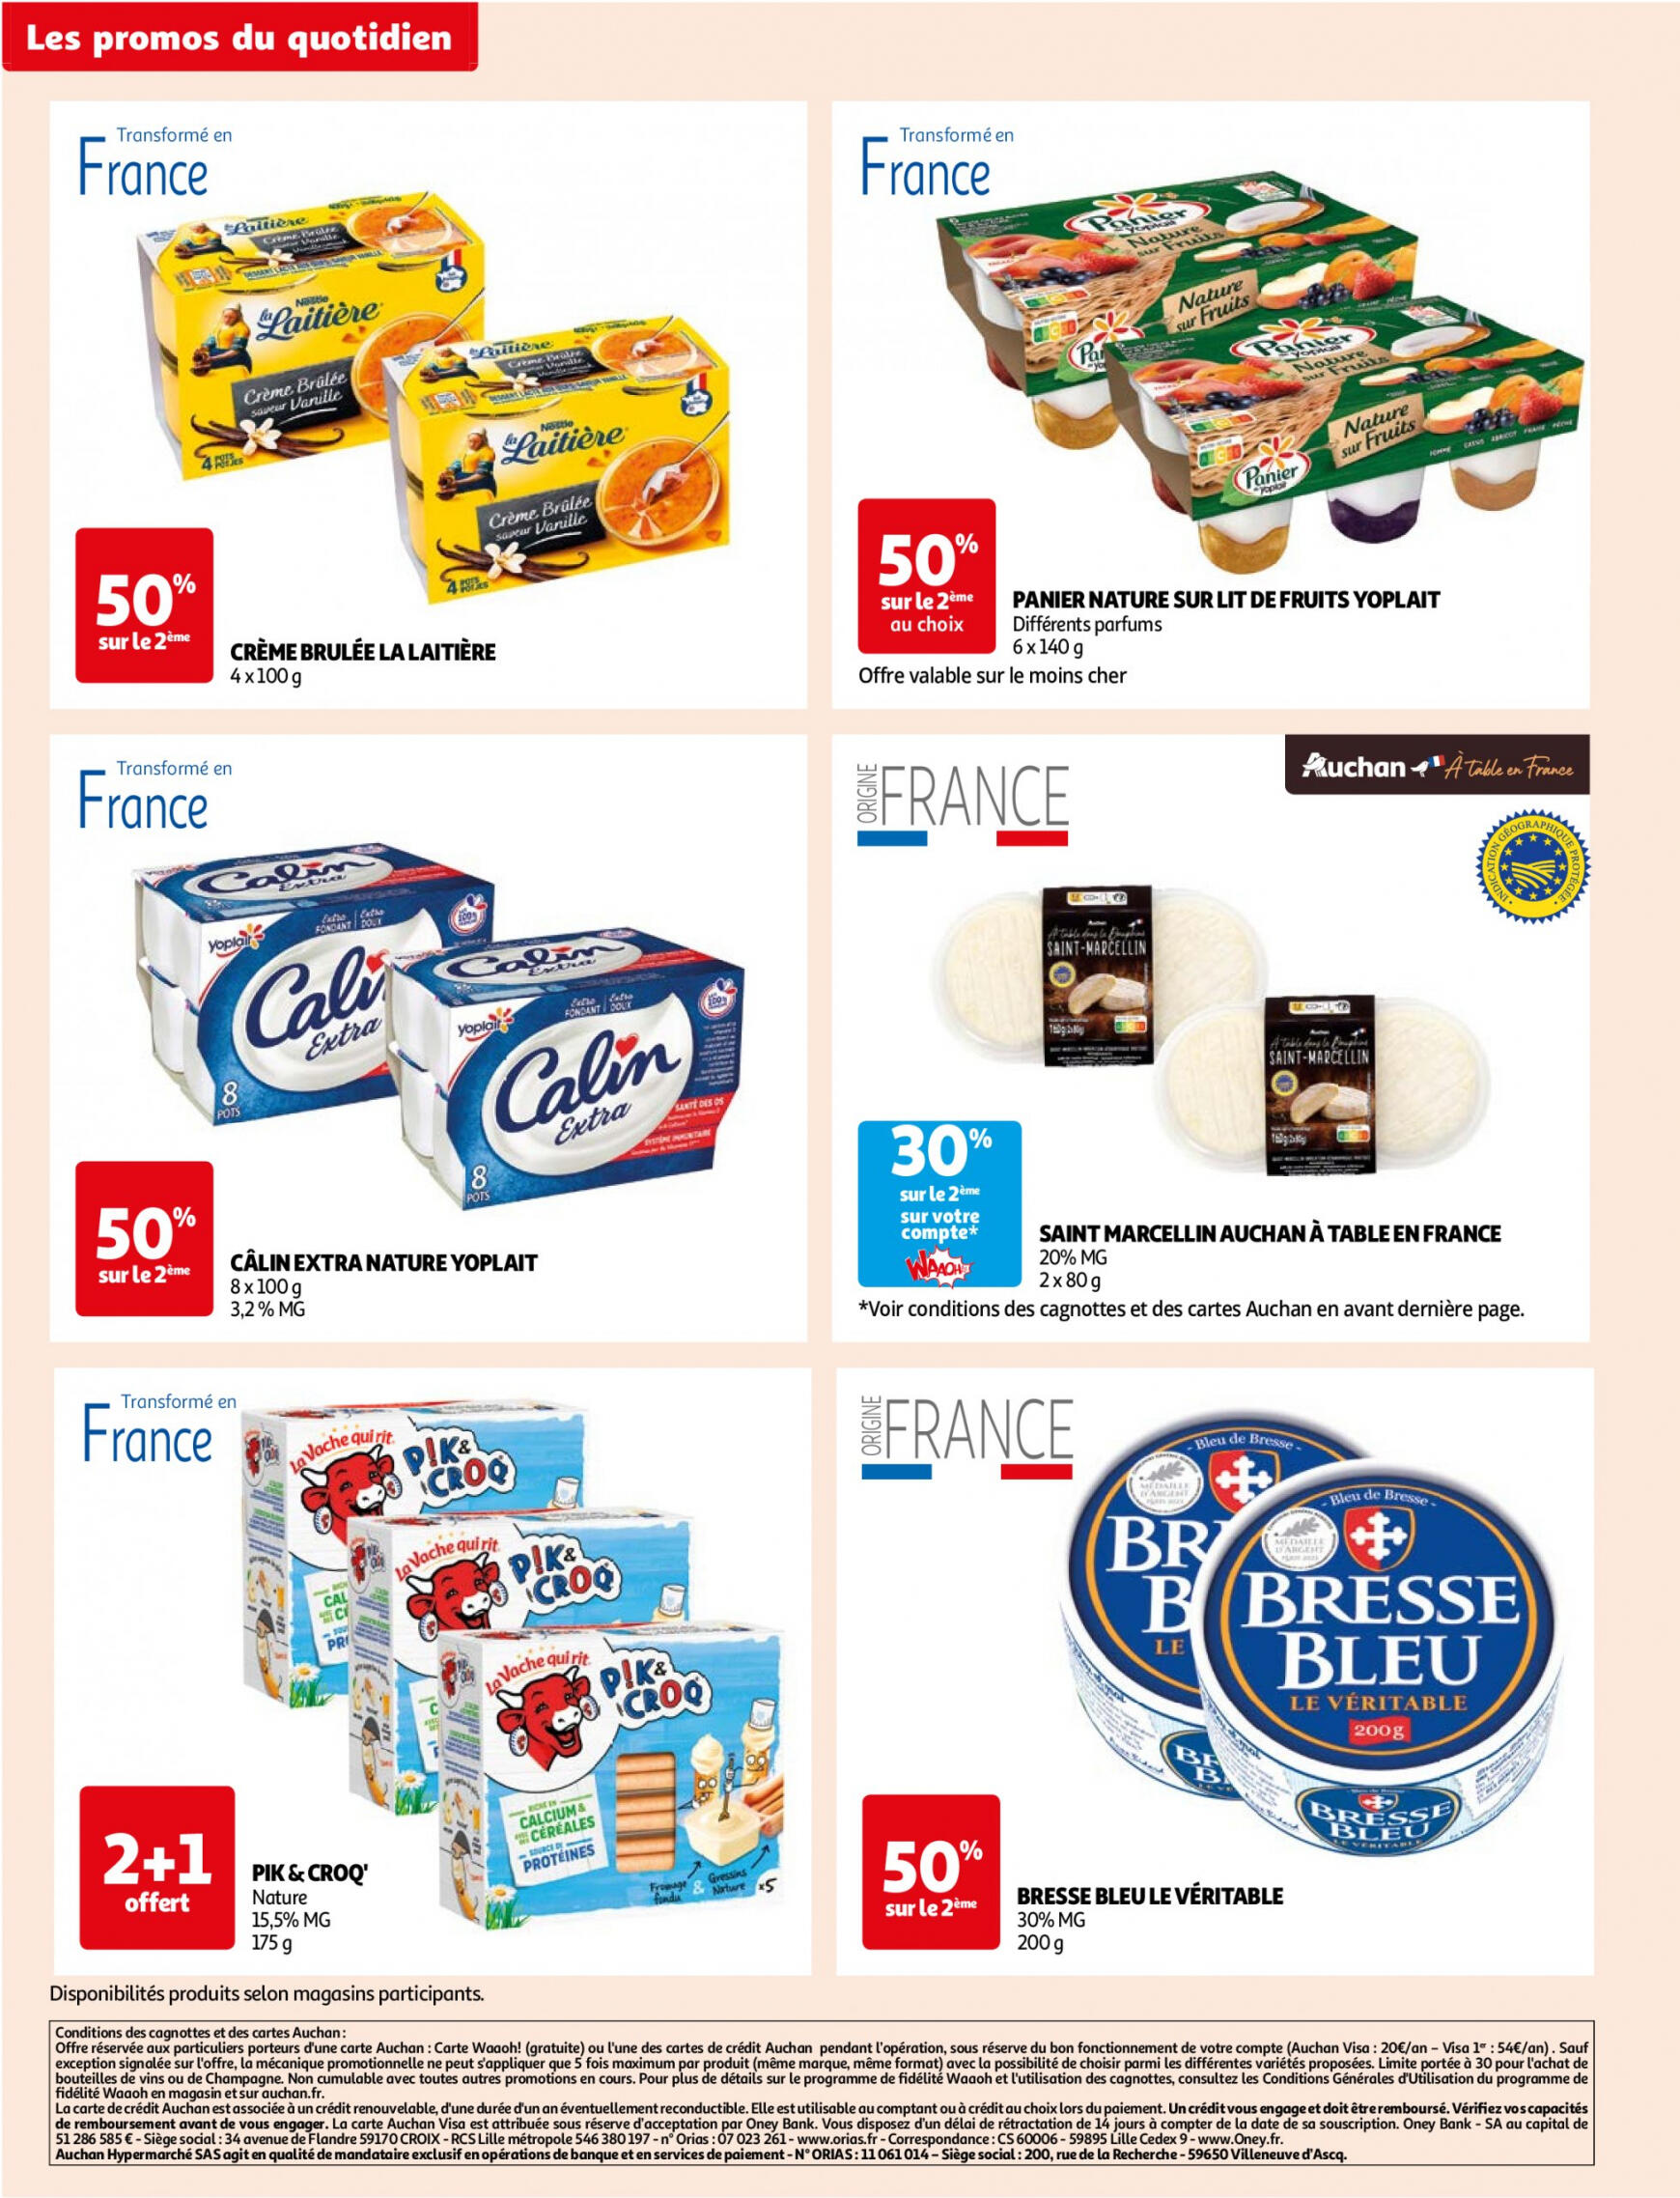 auchan - Auchan - Supermarché folder huidig 14.05. - 02.06. - page: 8